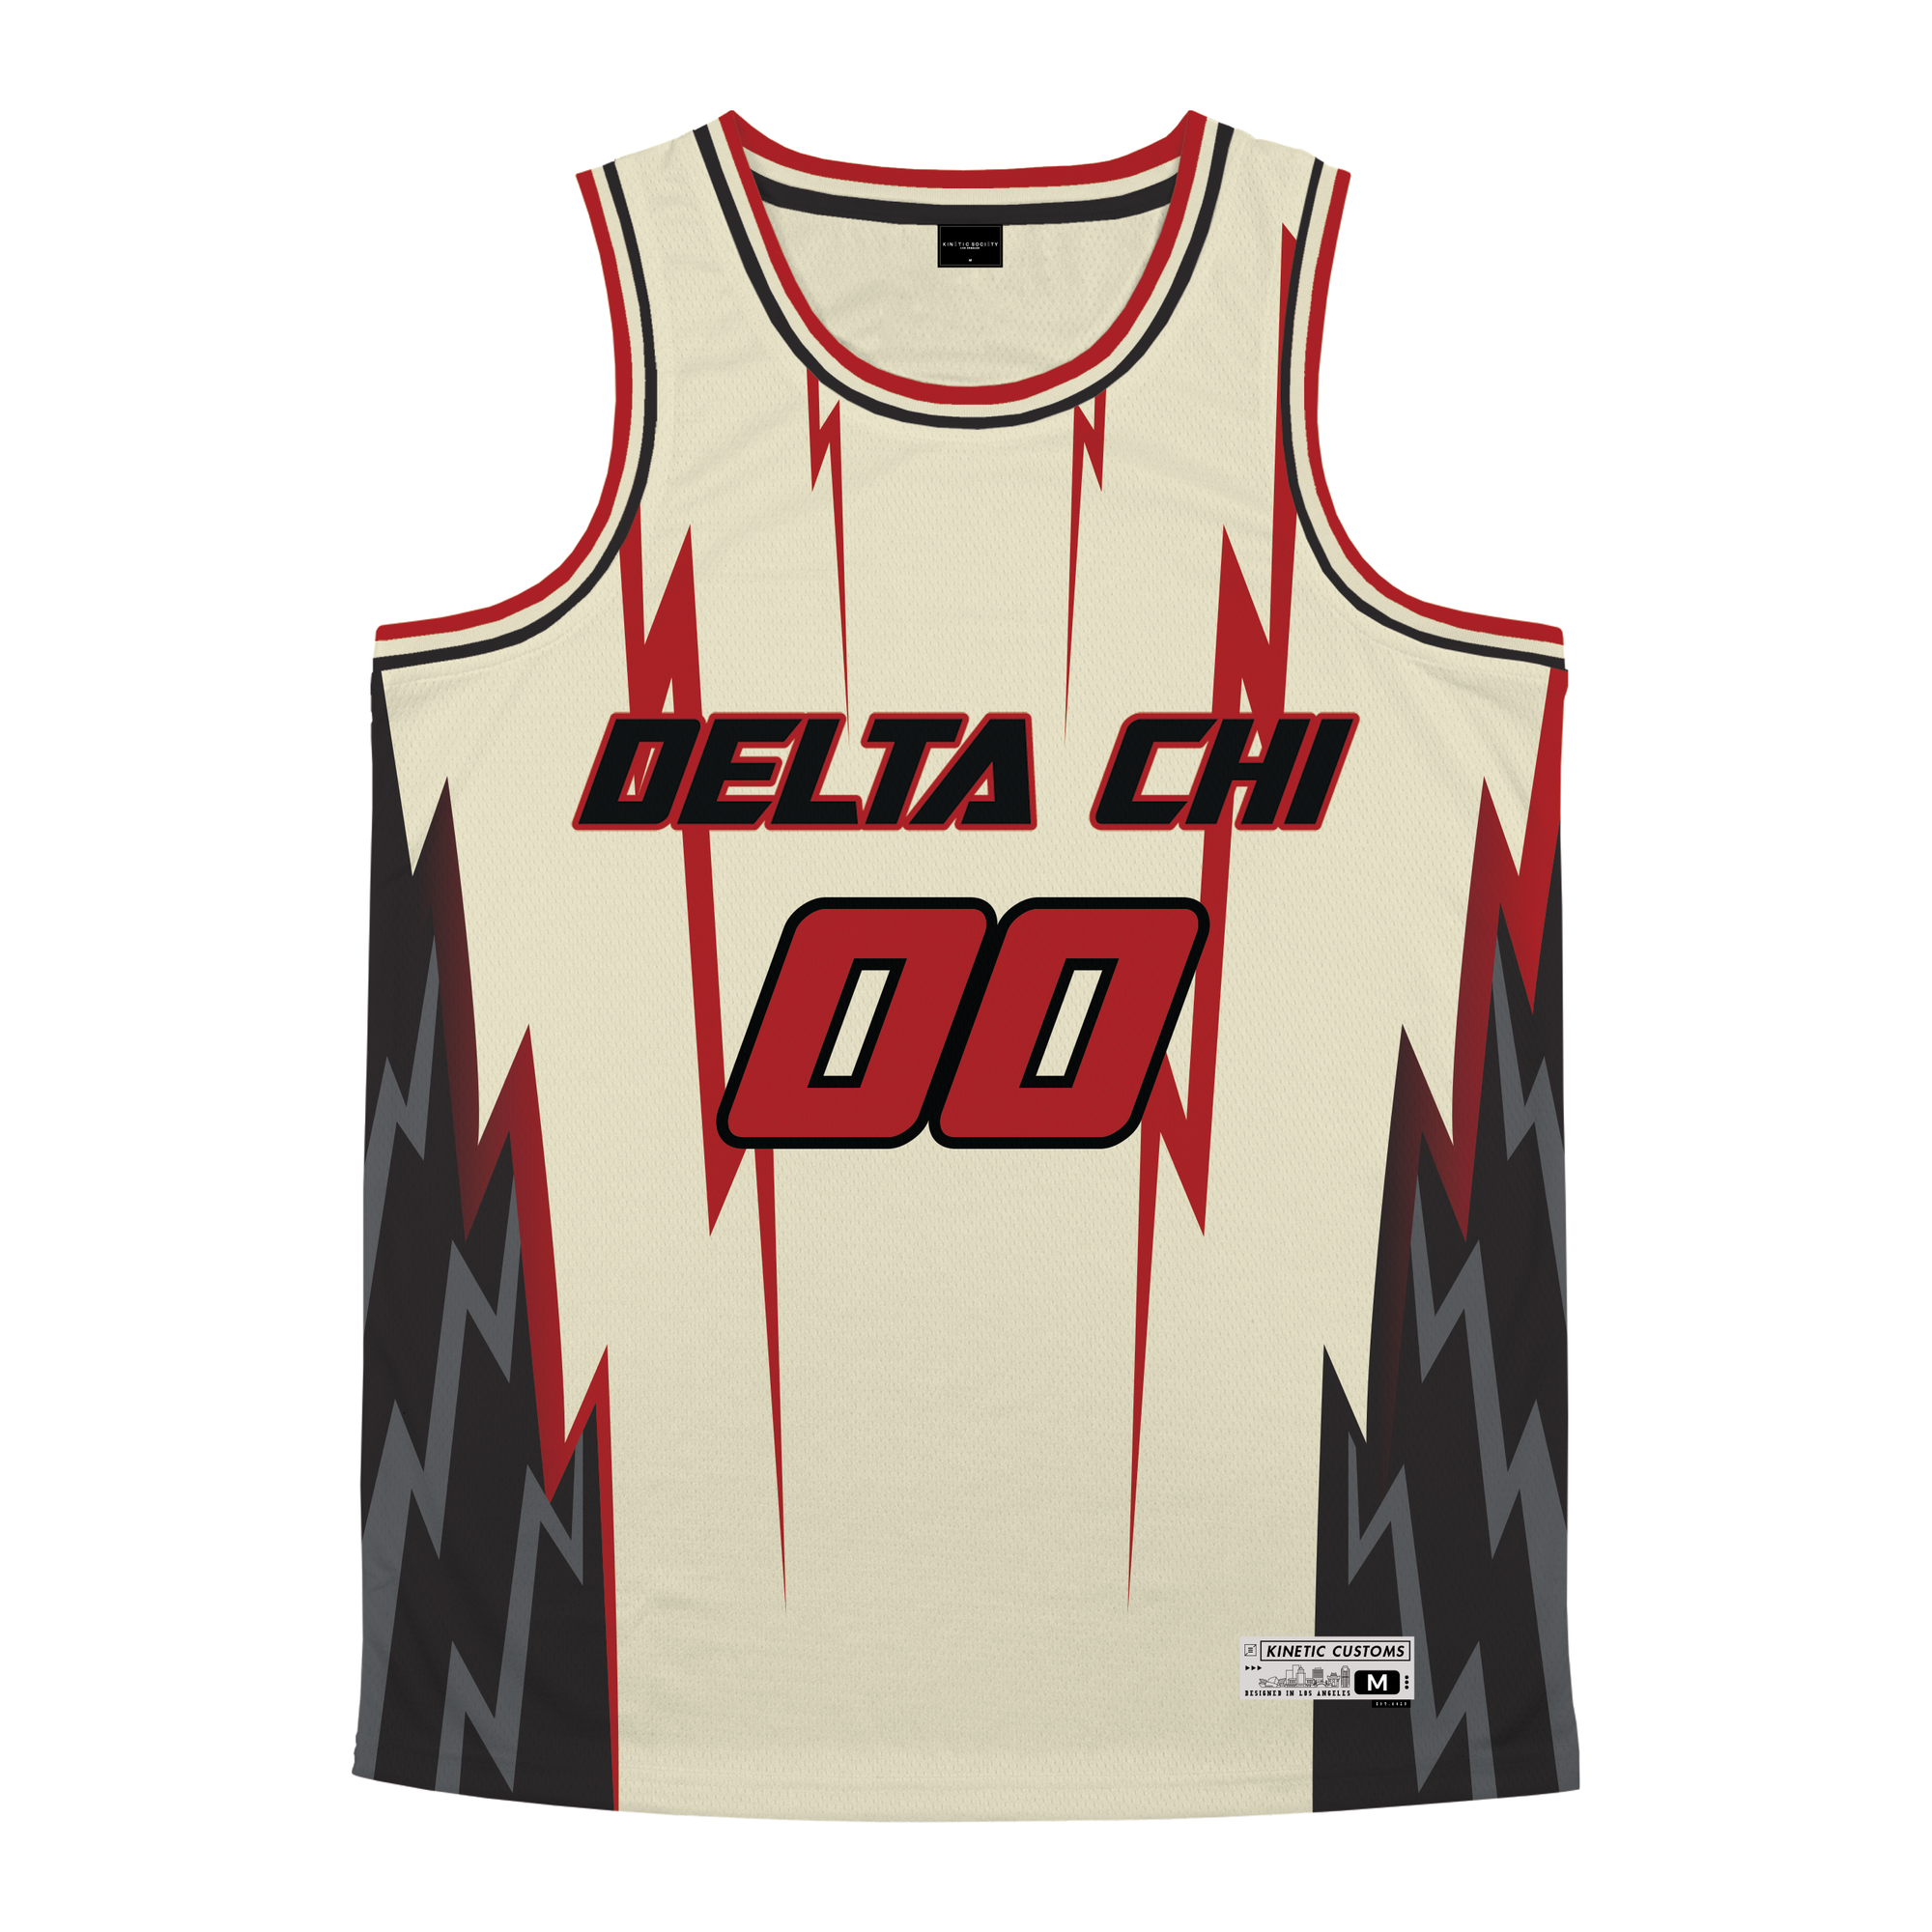 Delta Chi - Rapture Basketball Jersey